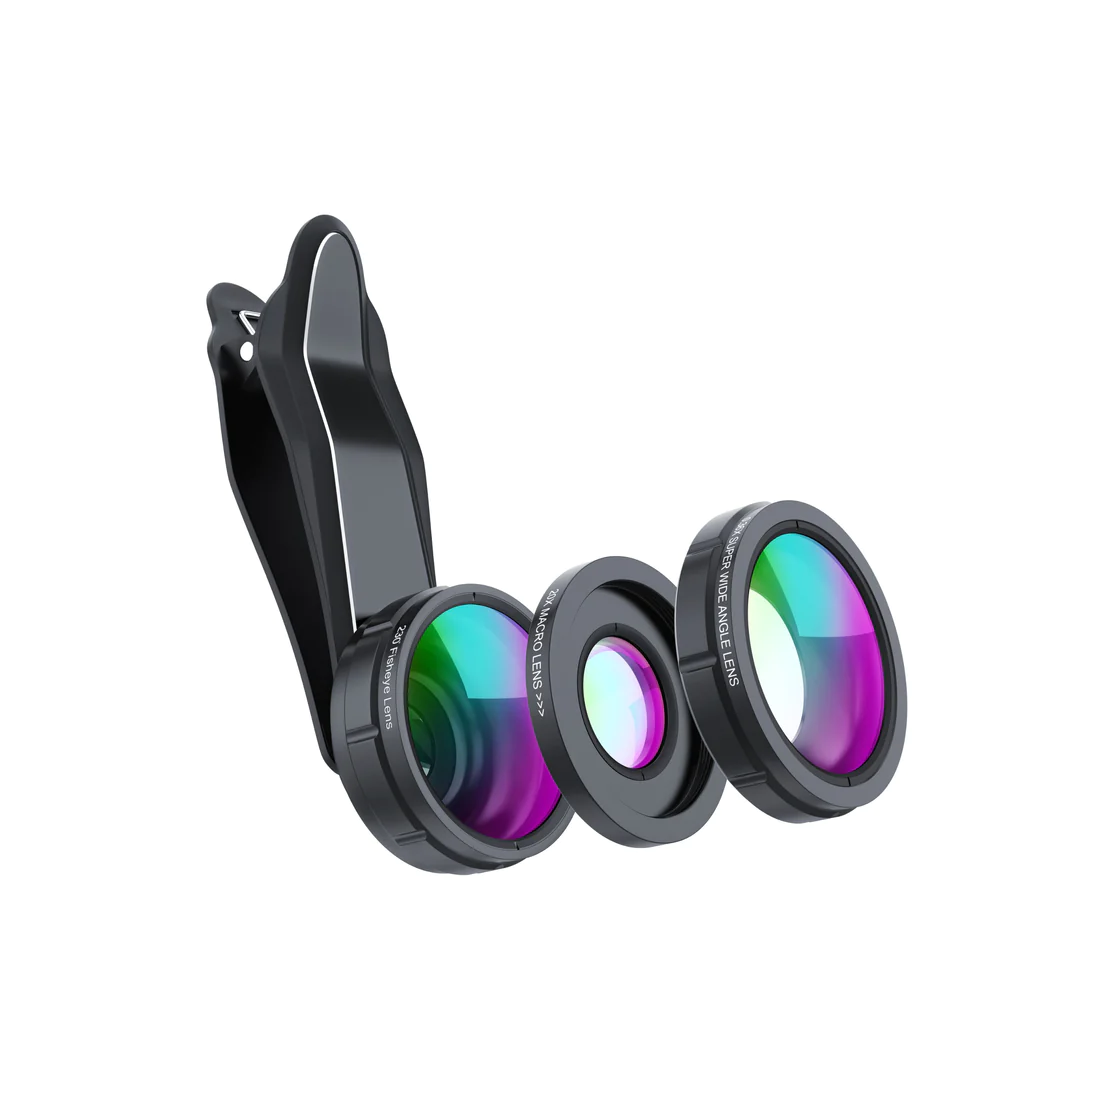 Comparing Mobile Camera Lenses: Skyvik's Versatile Lens Options